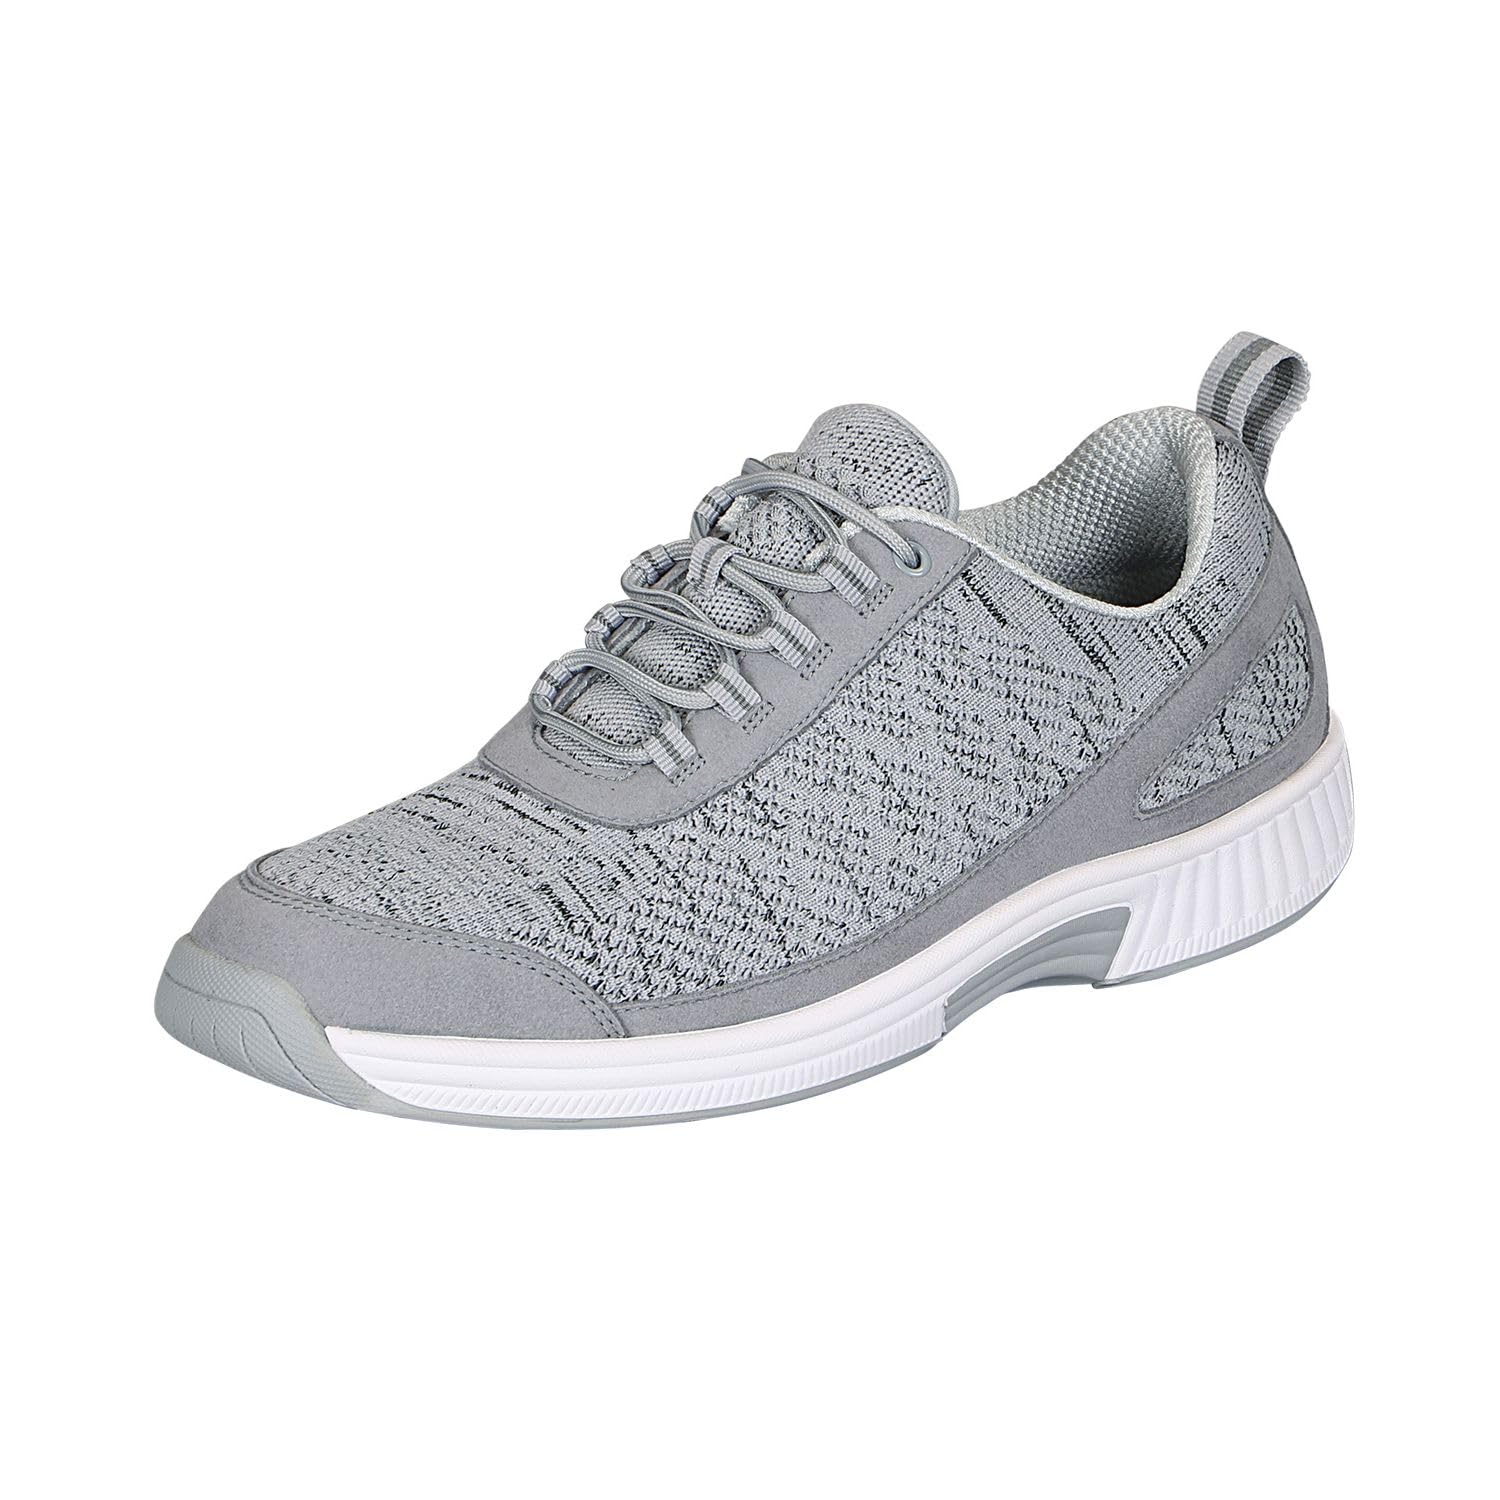 Orthofeet Men?s Orthopedic Walking Shoes, Lava Grey